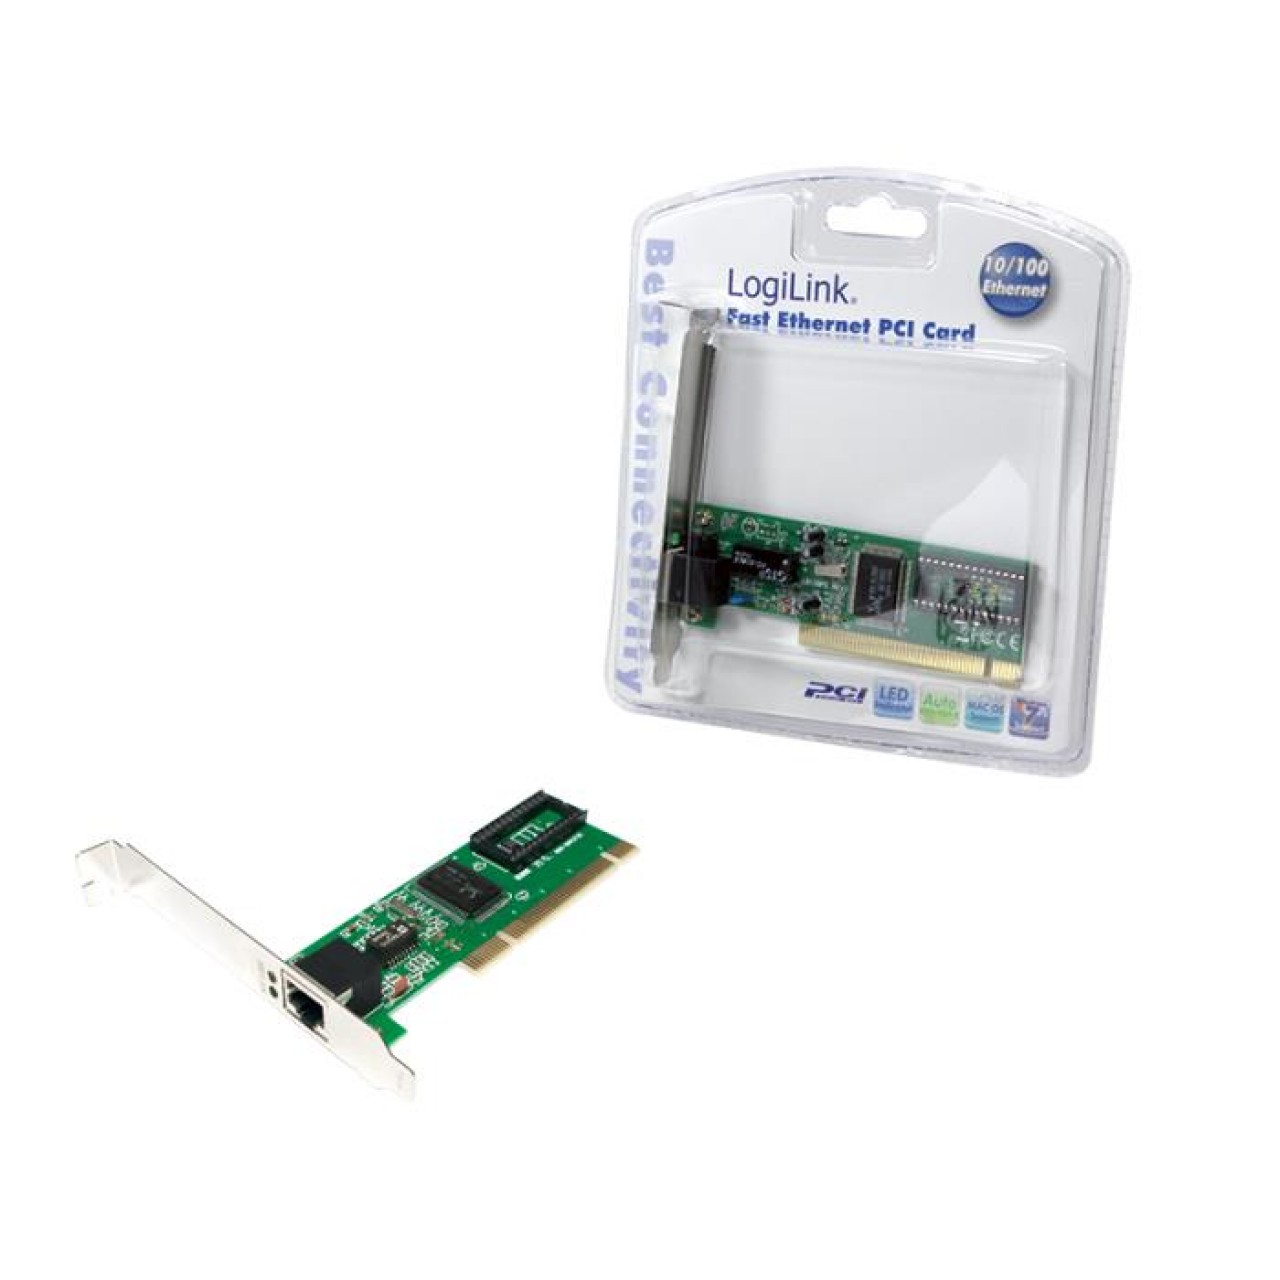 Pci Fast Ethernet lan card Logilink PC0039